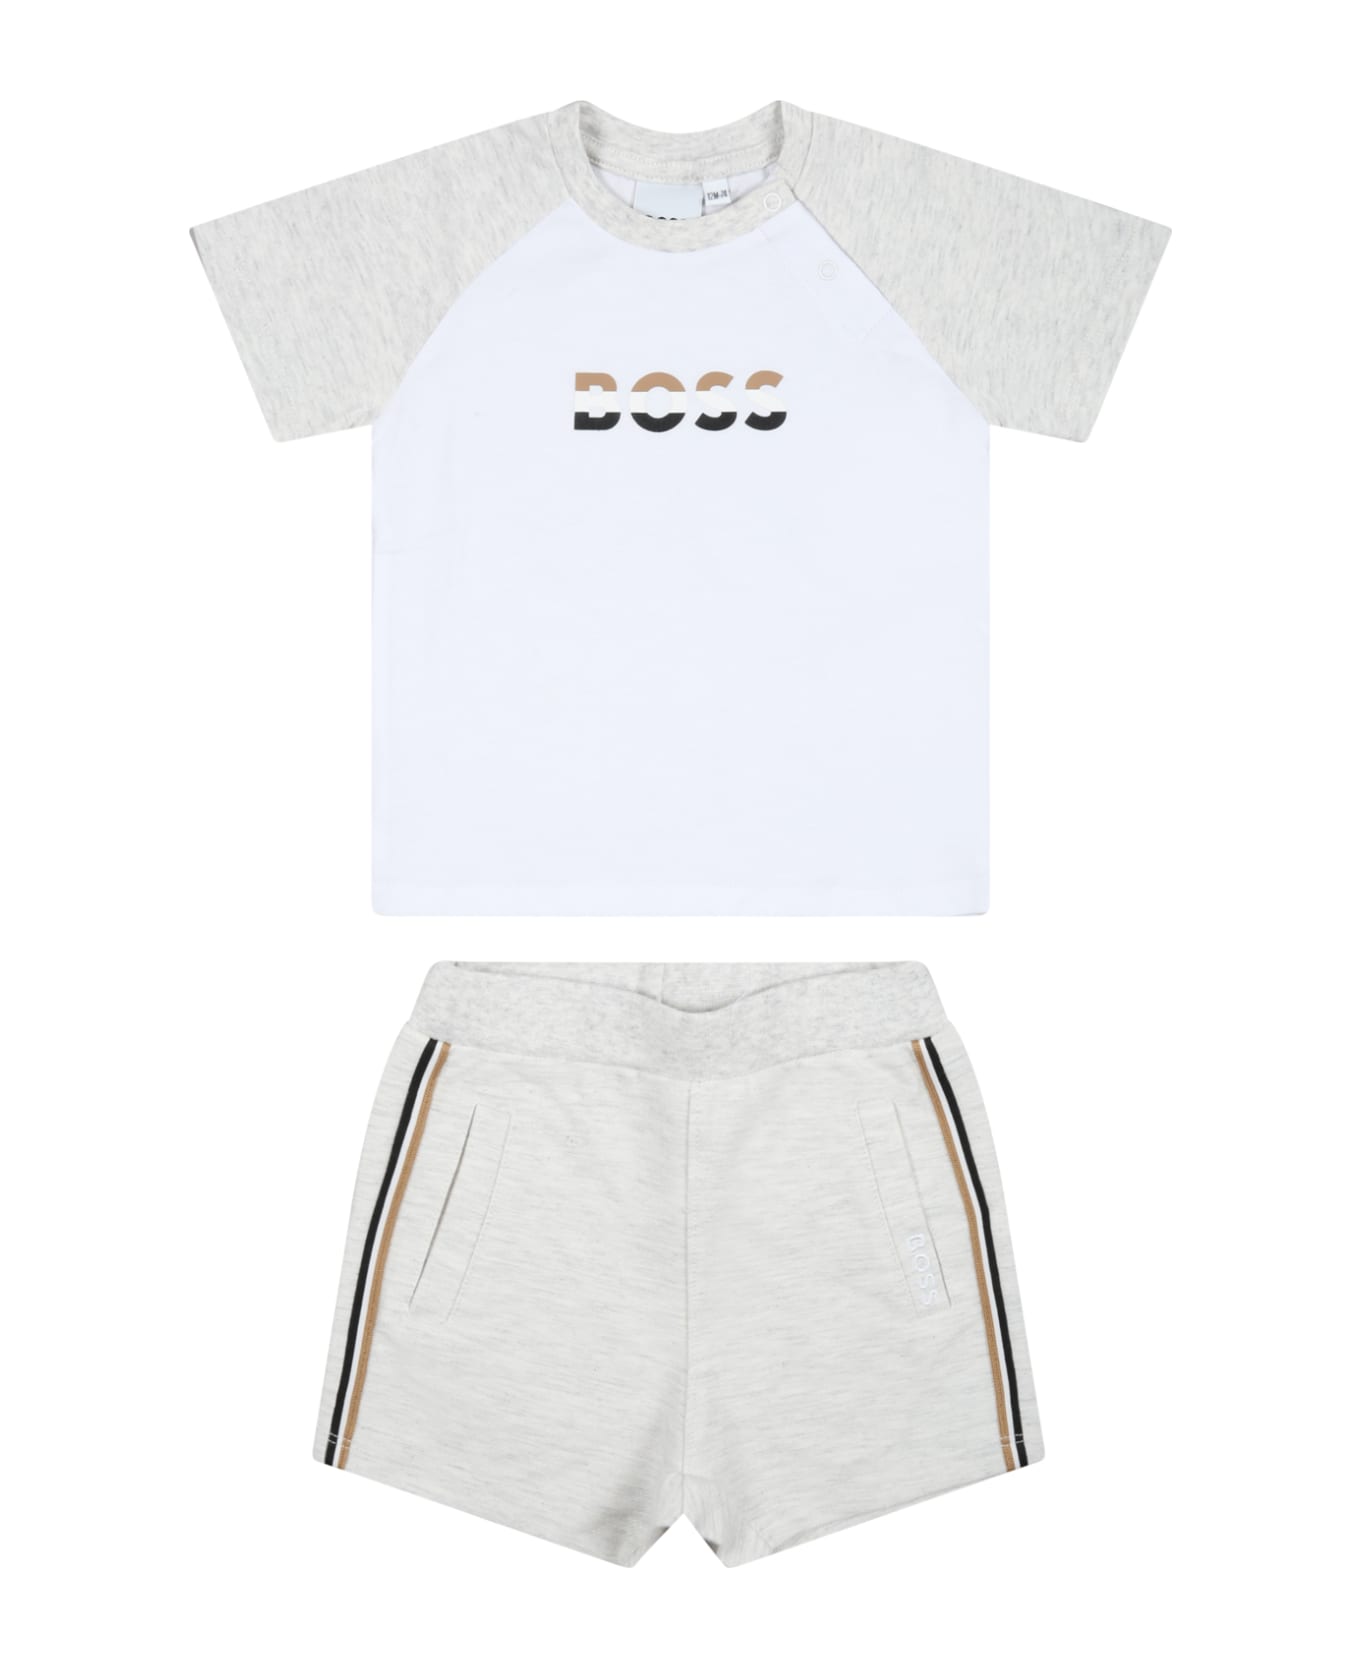 Hugo Boss Multicolor Set For Baby Boy With Logo - Grey